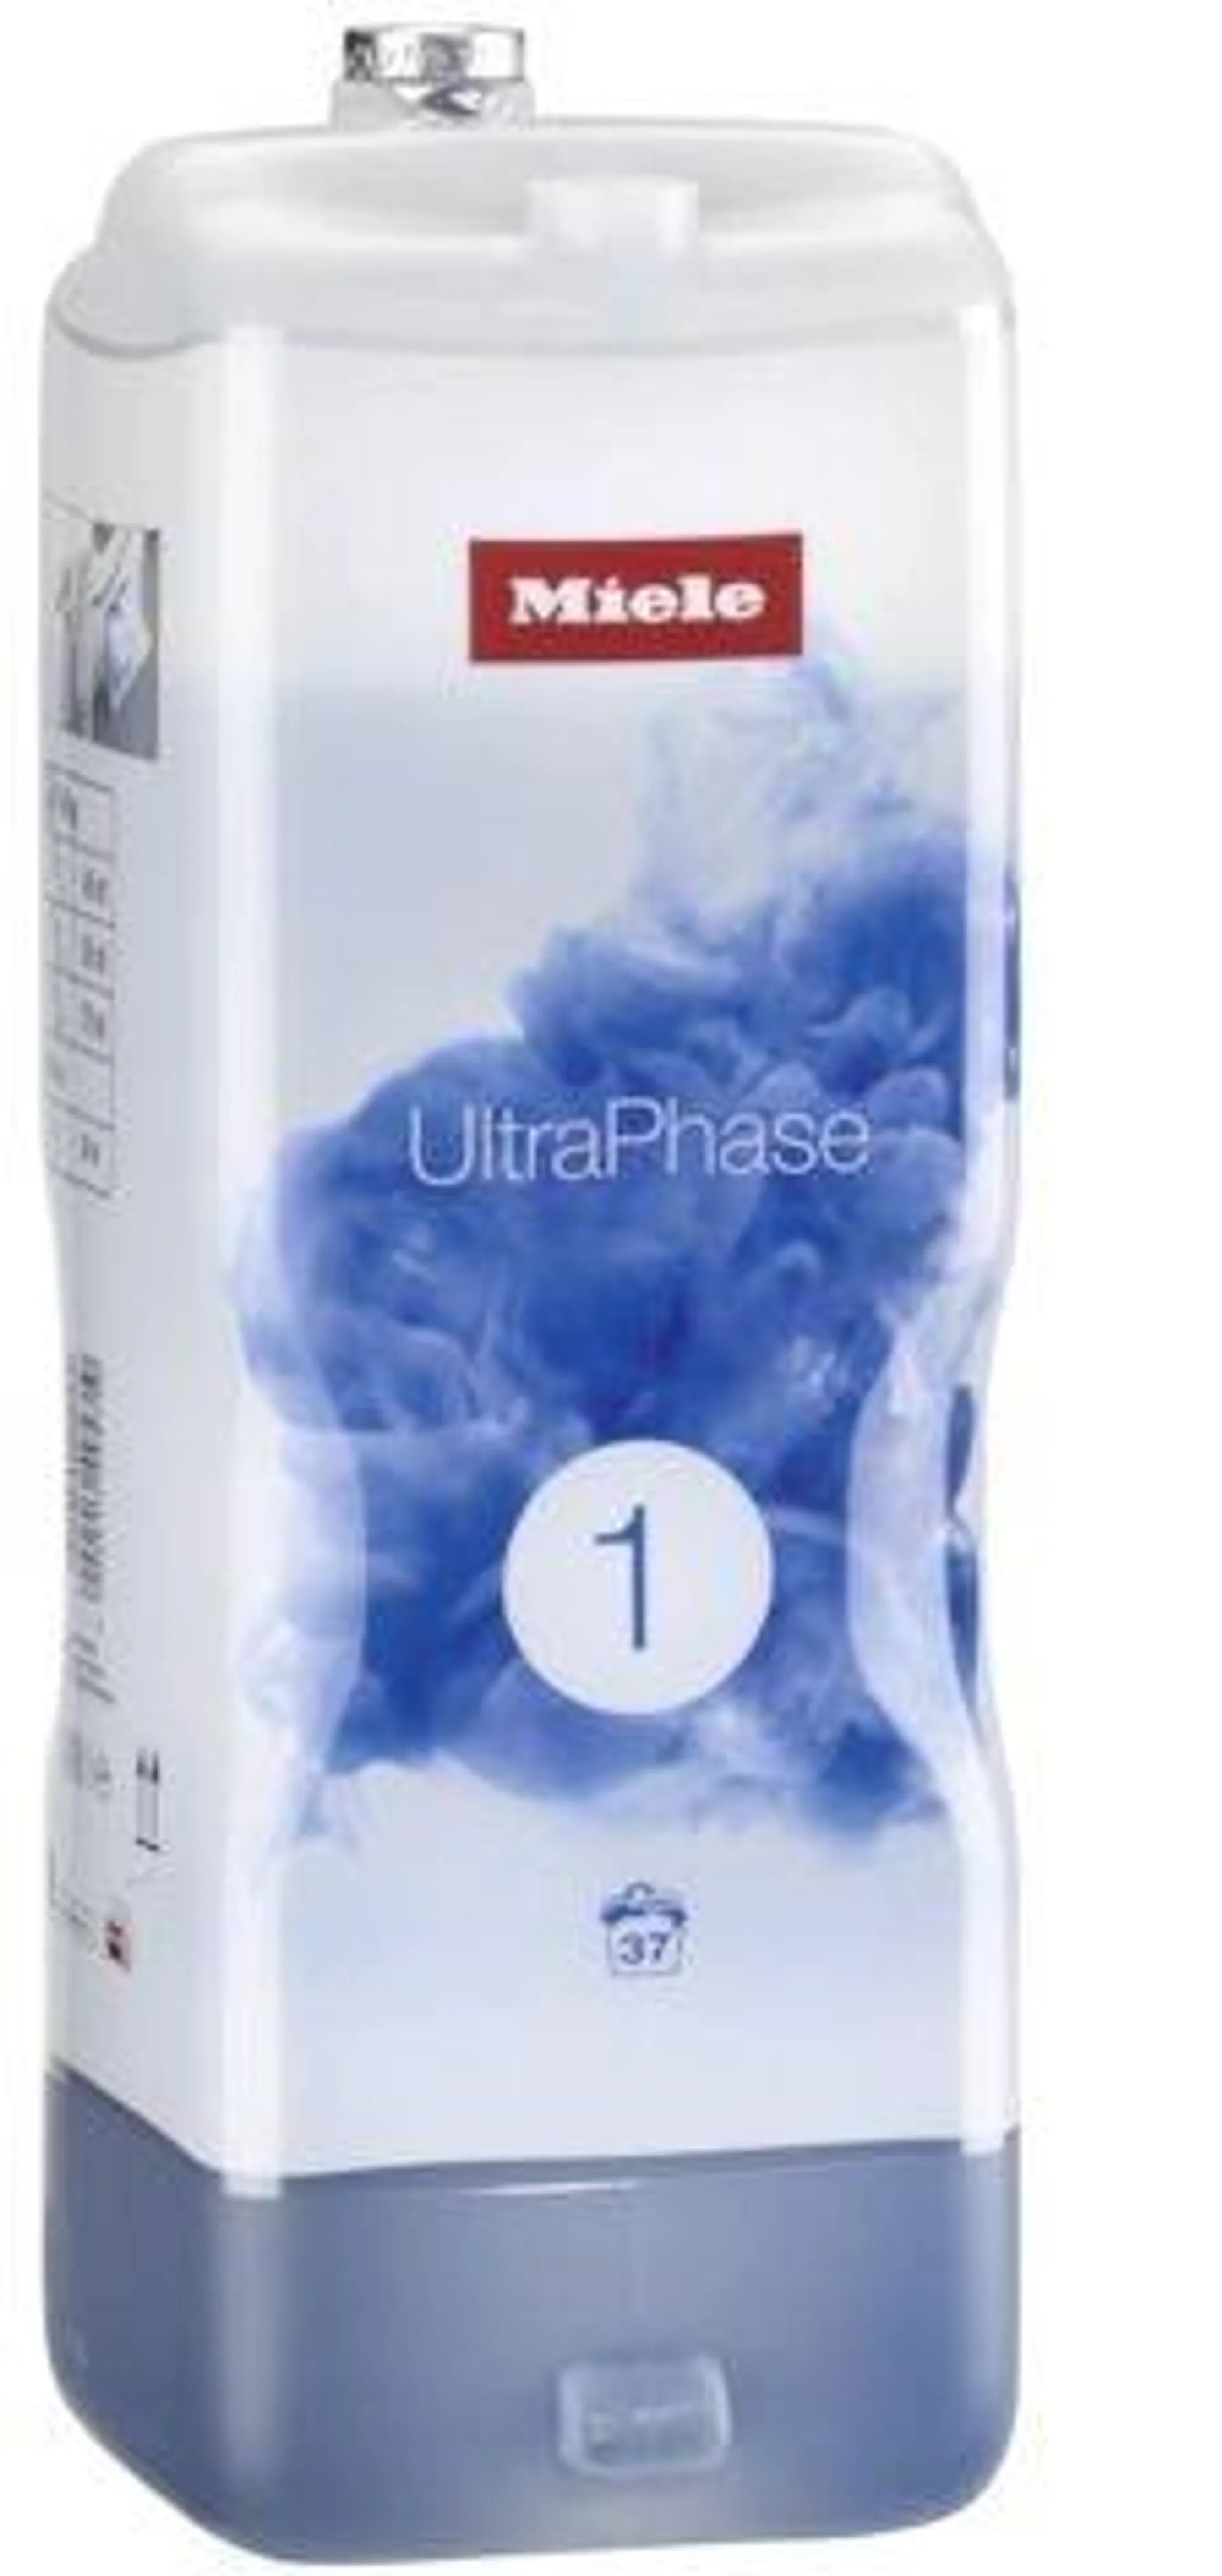 Miele UltraPhase 1 regulier wasmiddel